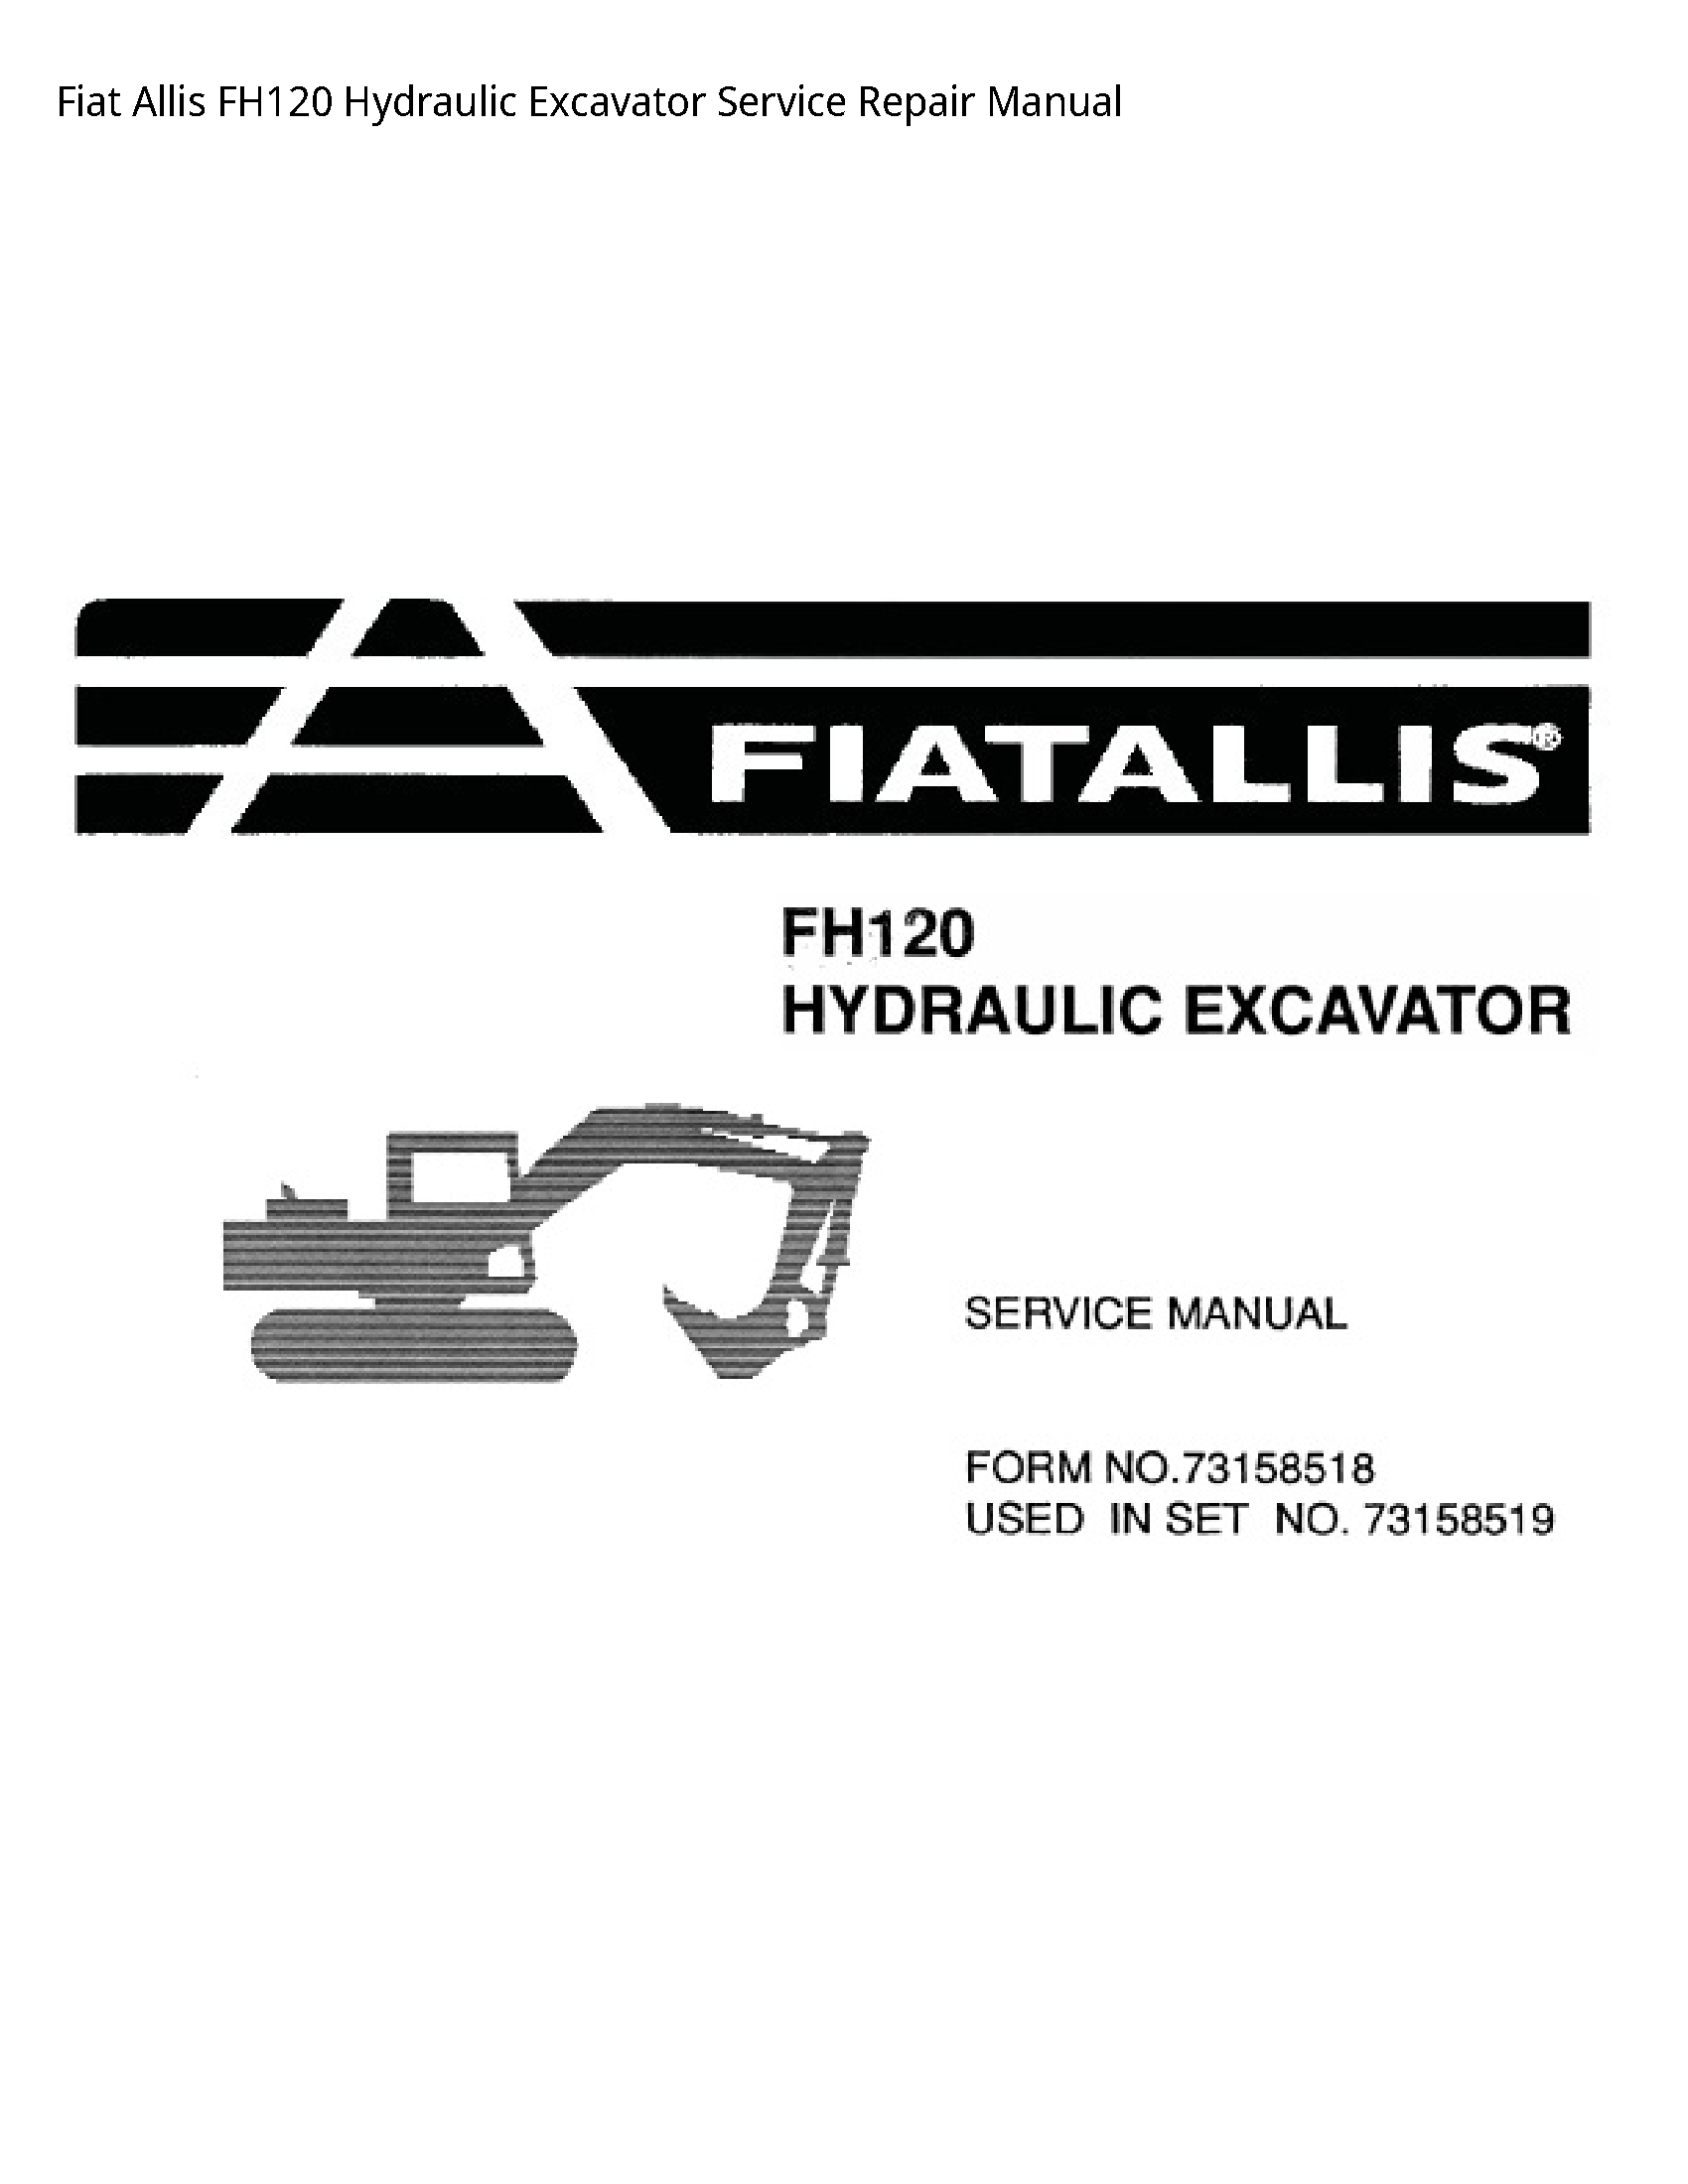 Fiat Allis FH120 Hydraulic Excavator manual